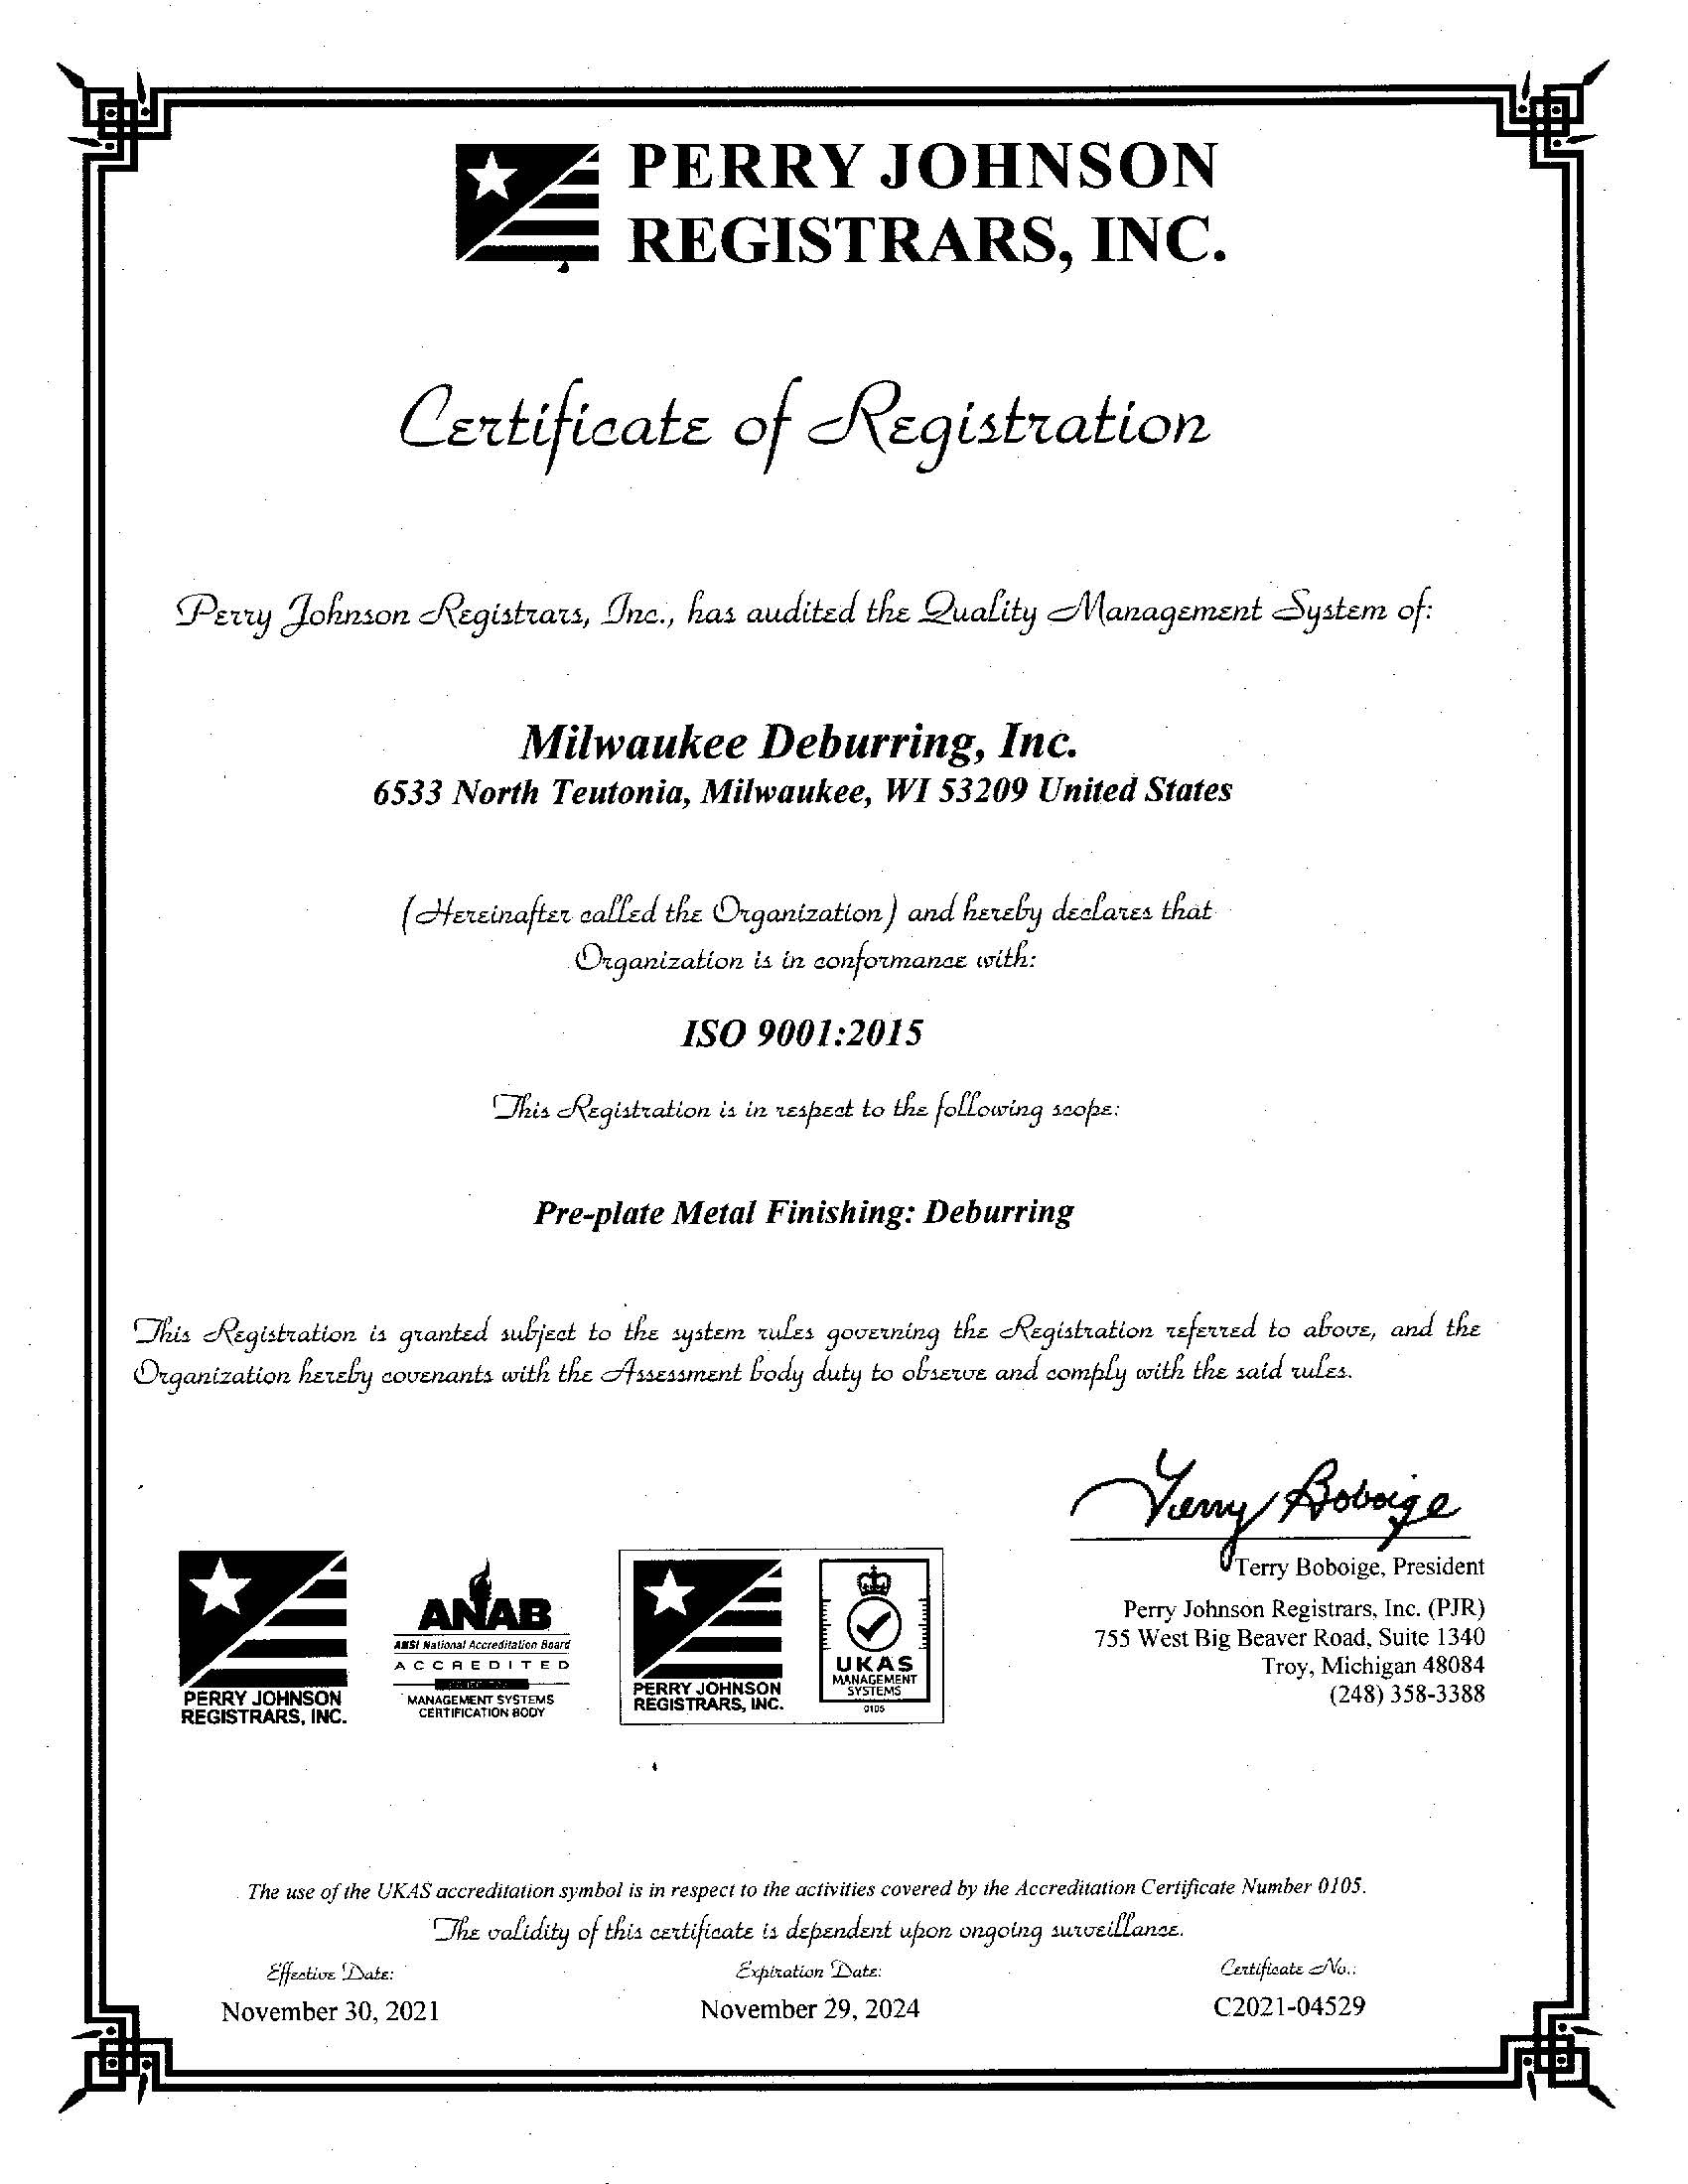 Milwaukee Deburring ISO Certificate for 11-30-21 thru 11-29-2024